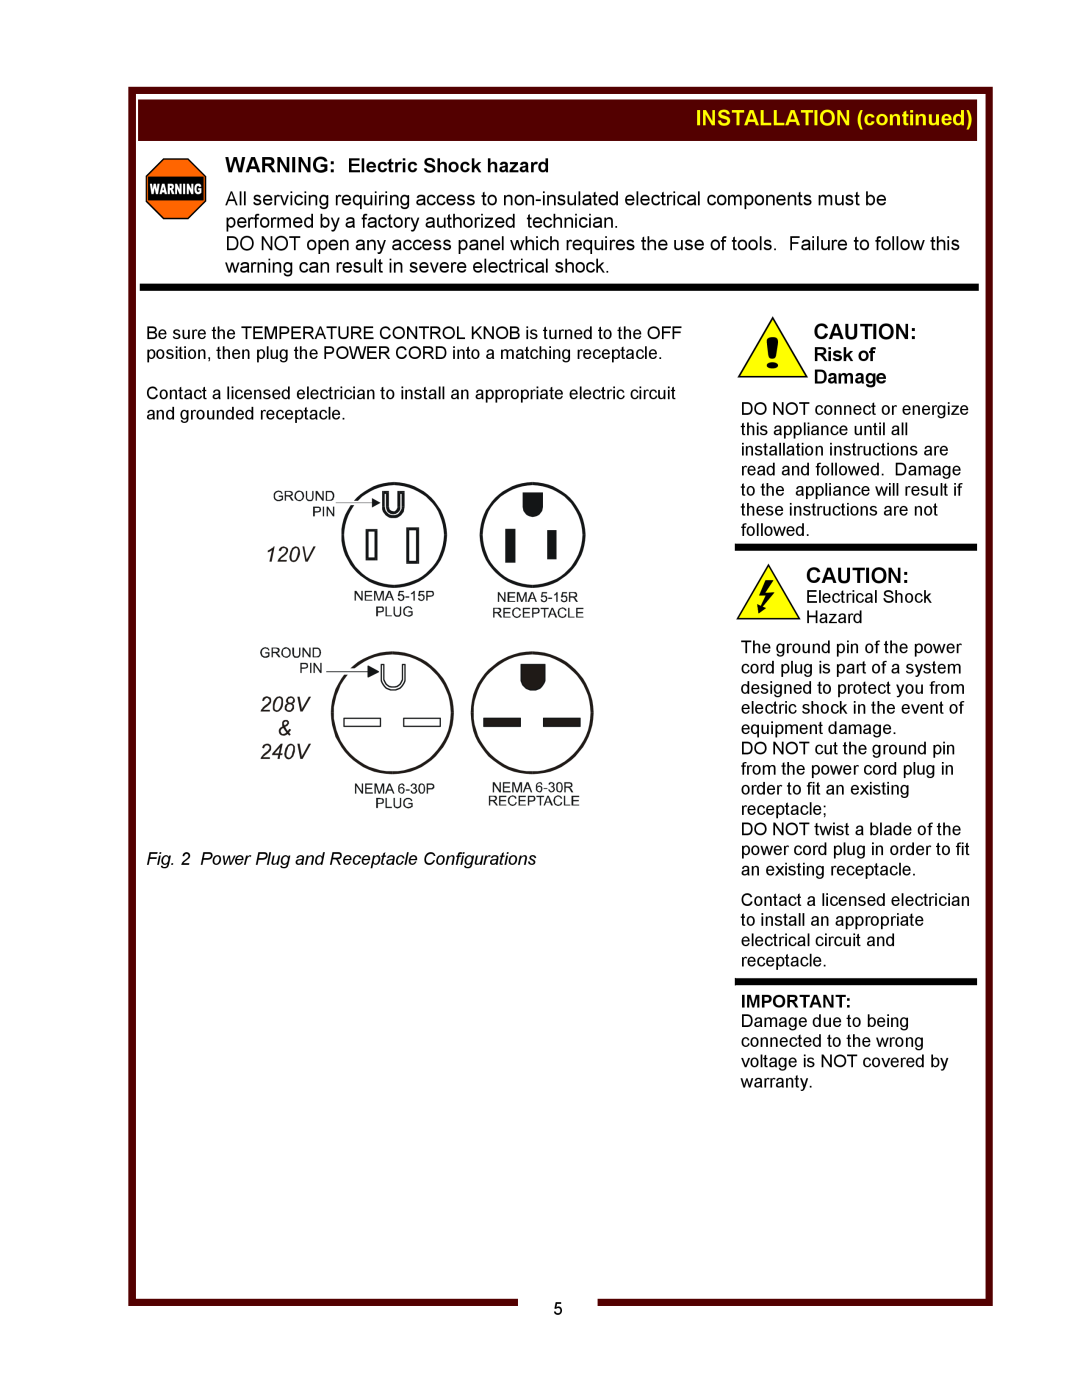 Wells Model LLF-14 operation manual INSTALLATION continued, WARNING Electric Shock hazard, Risk of Damage 